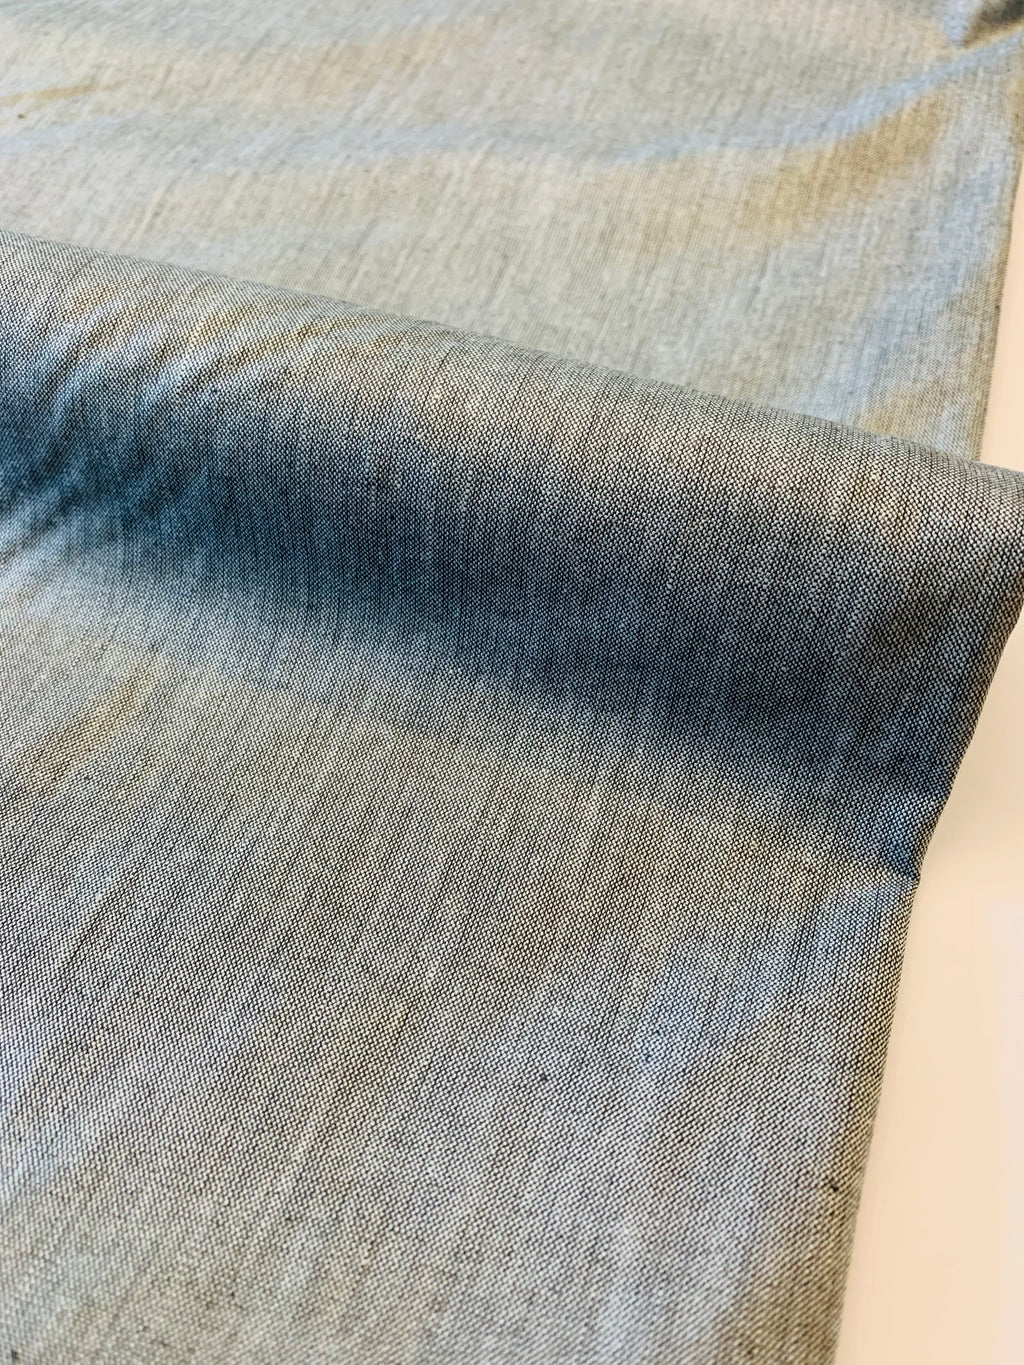 Moda: Crossweave Cotton in Light Grey